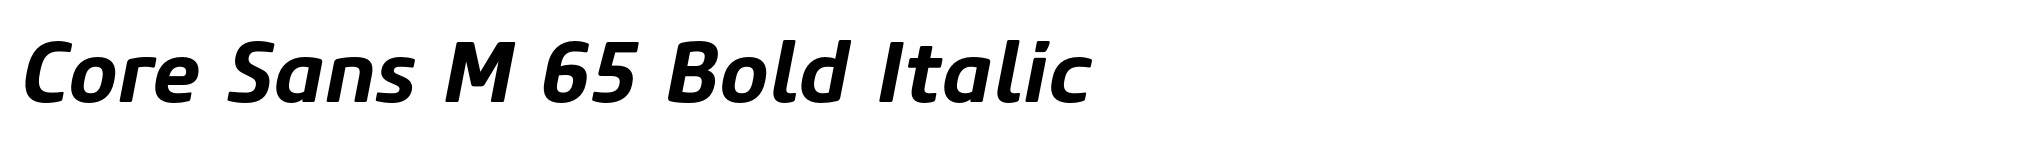 Core Sans M 65 Bold Italic image